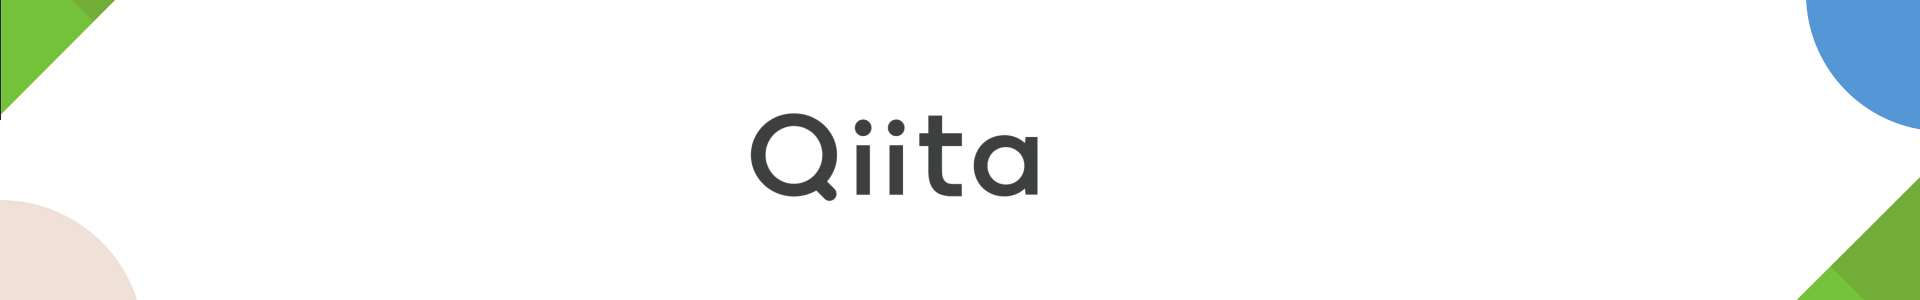 Qiita株式会社